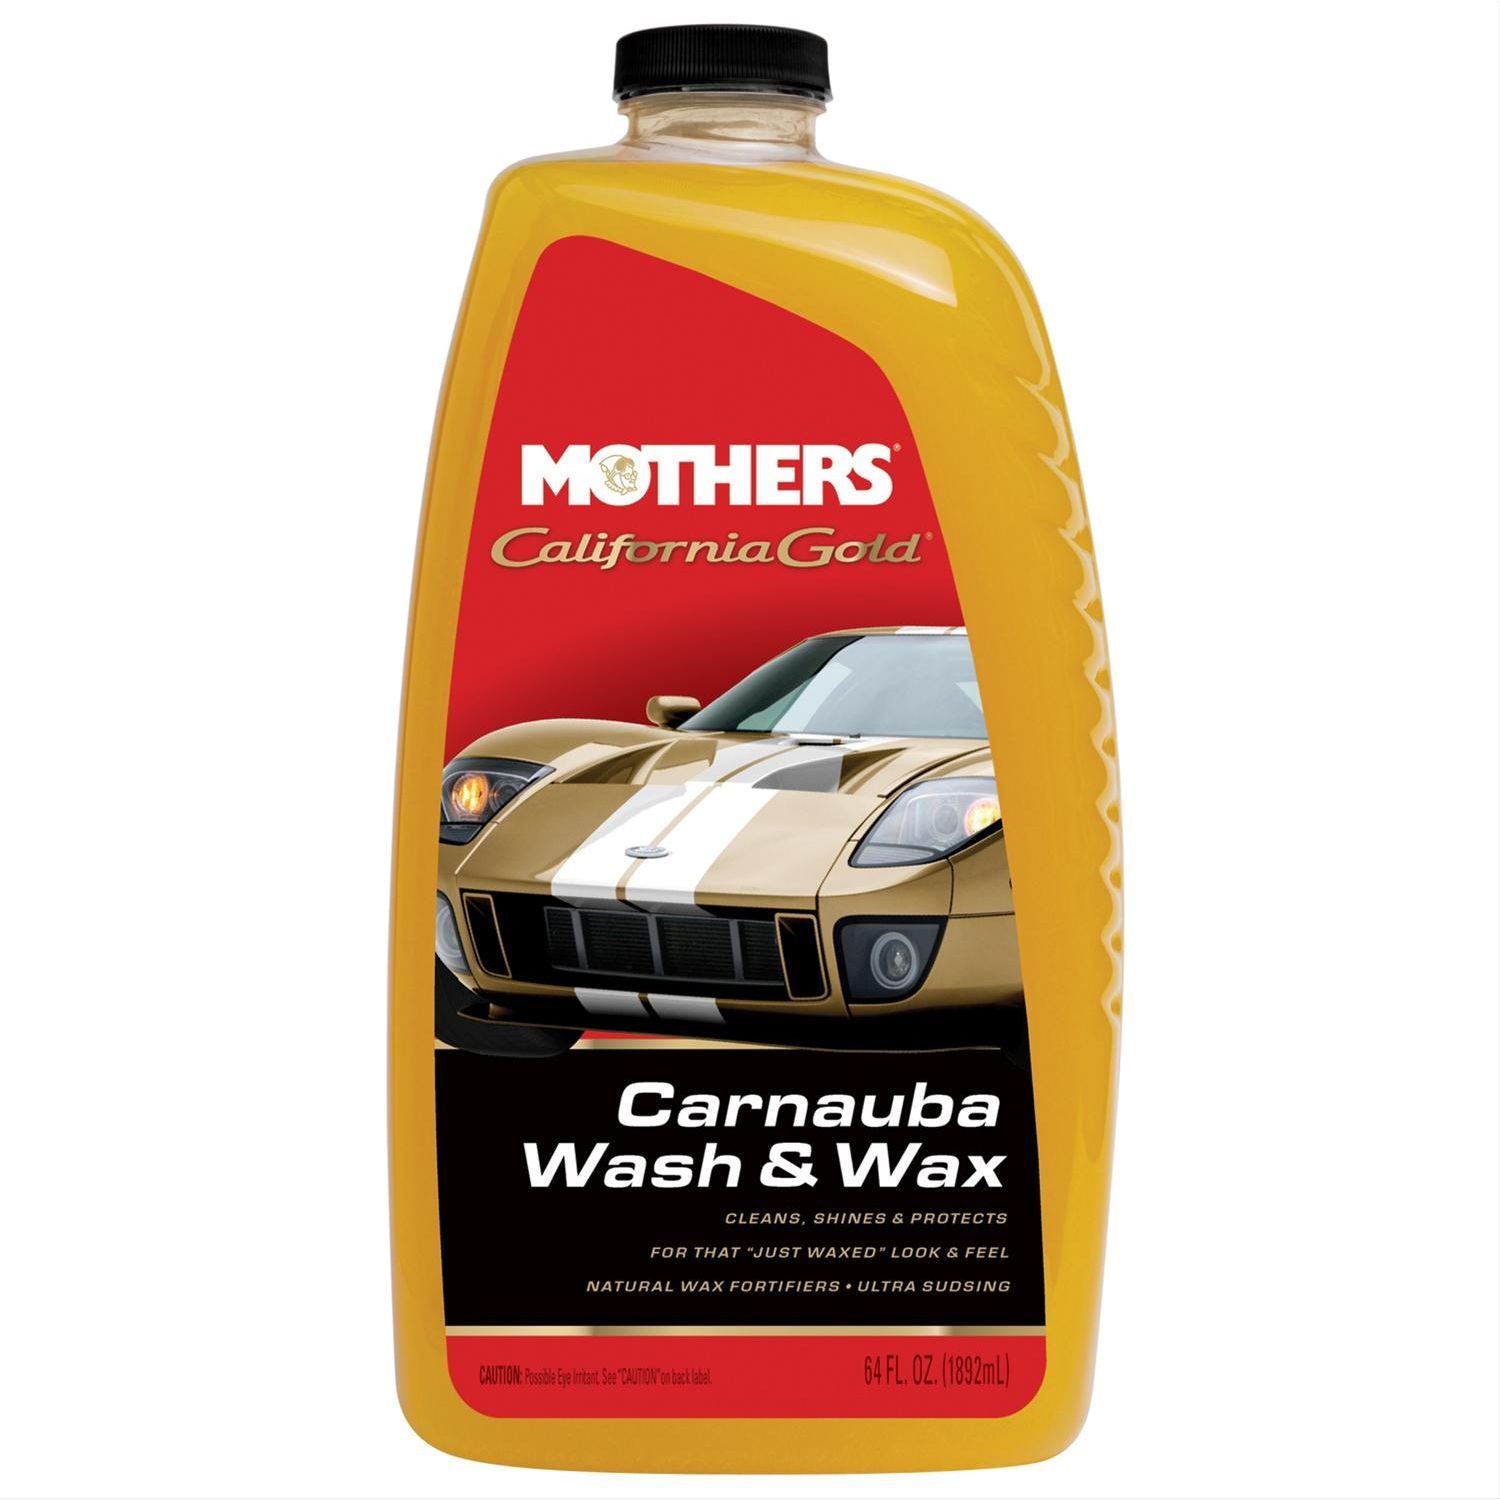 Mothers California Gold Carnauba Wash and Wax 5674